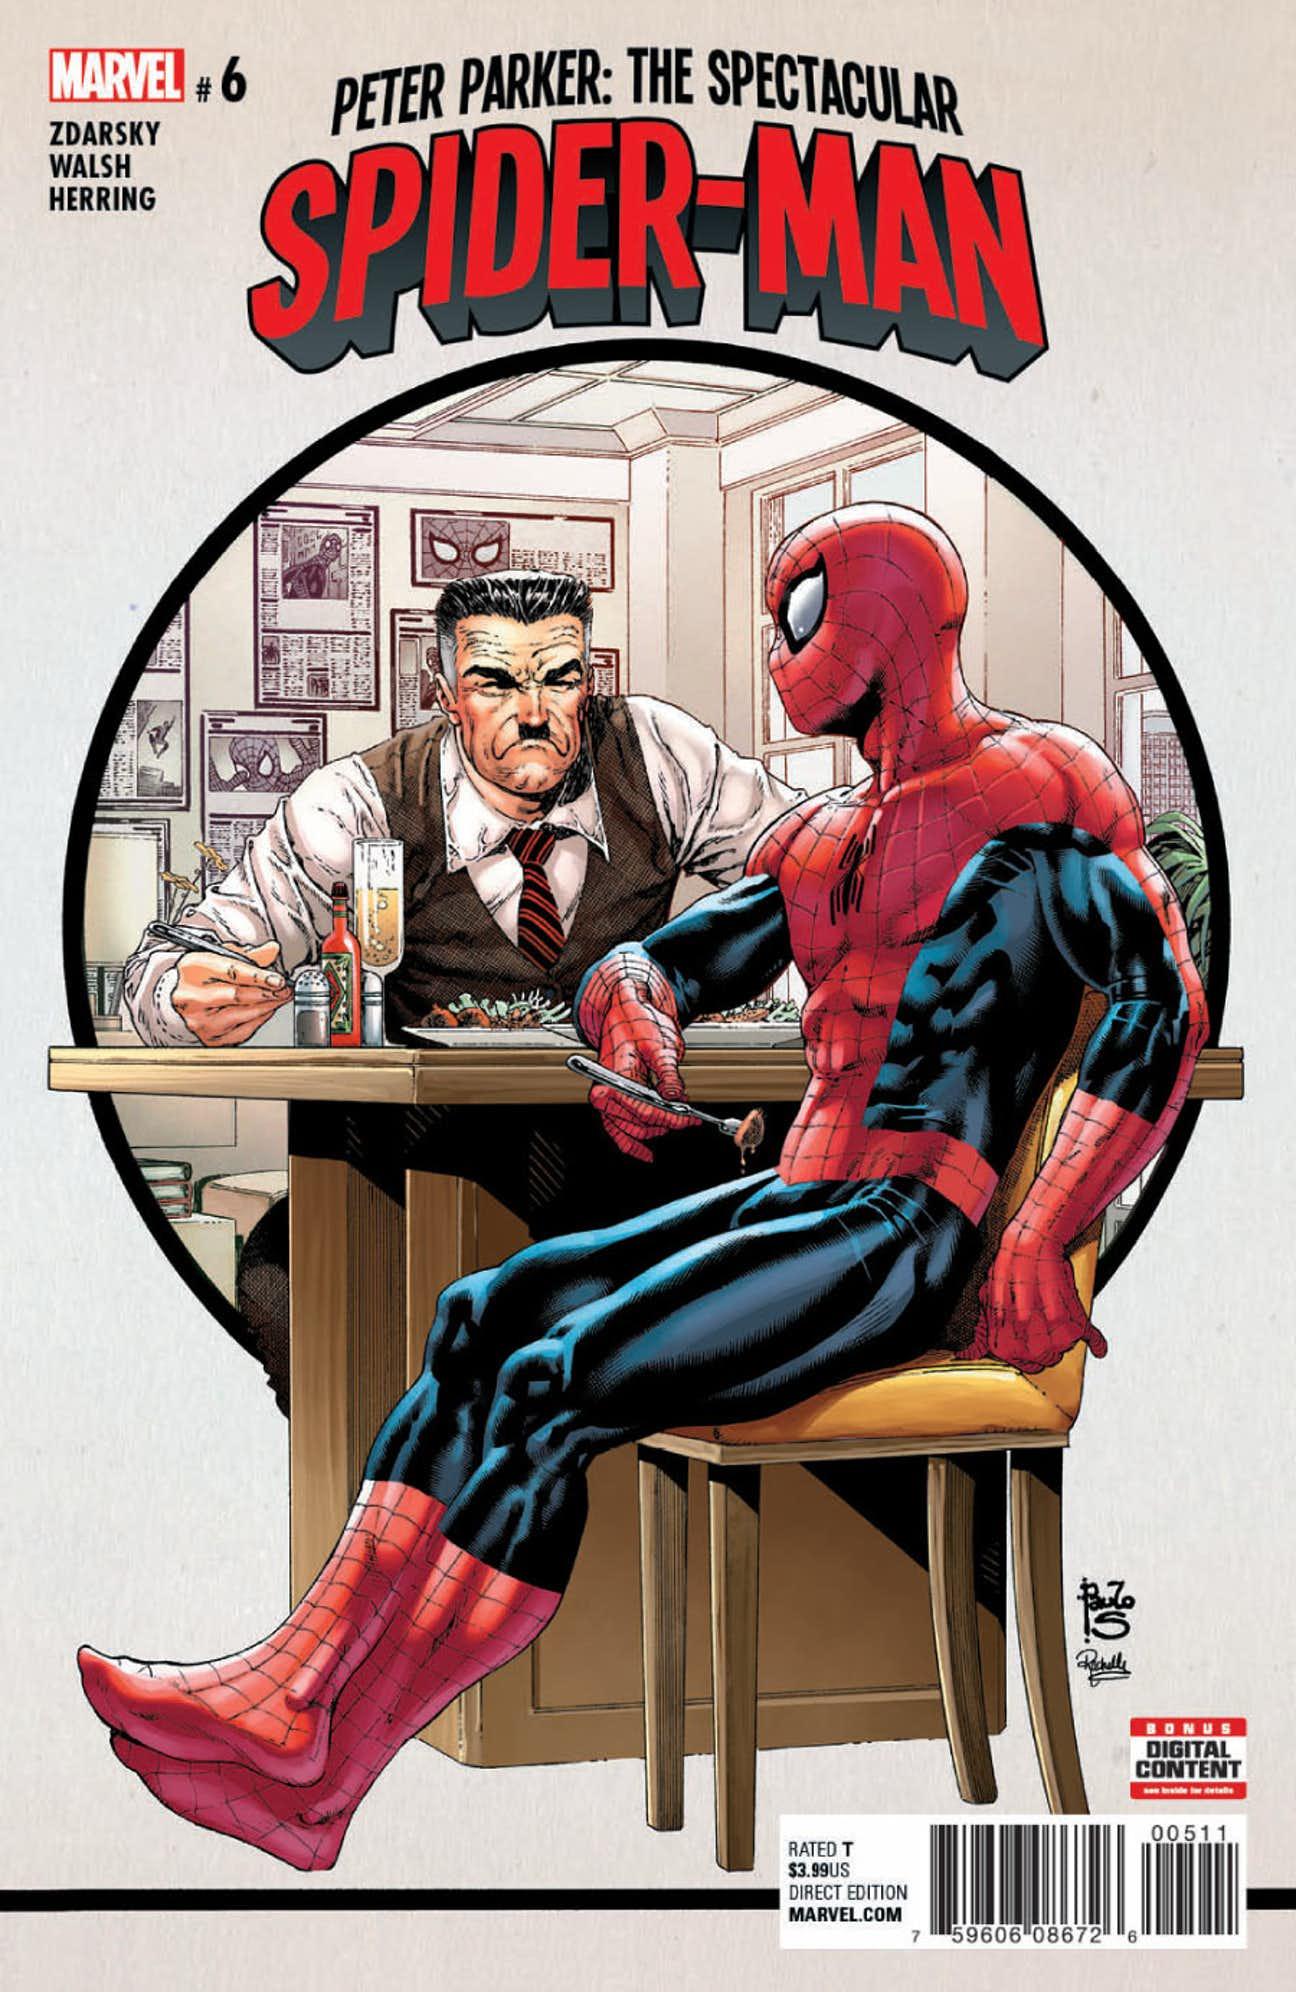 Peter Parker: The Spectacular Spider-Man Vol. 1 #6